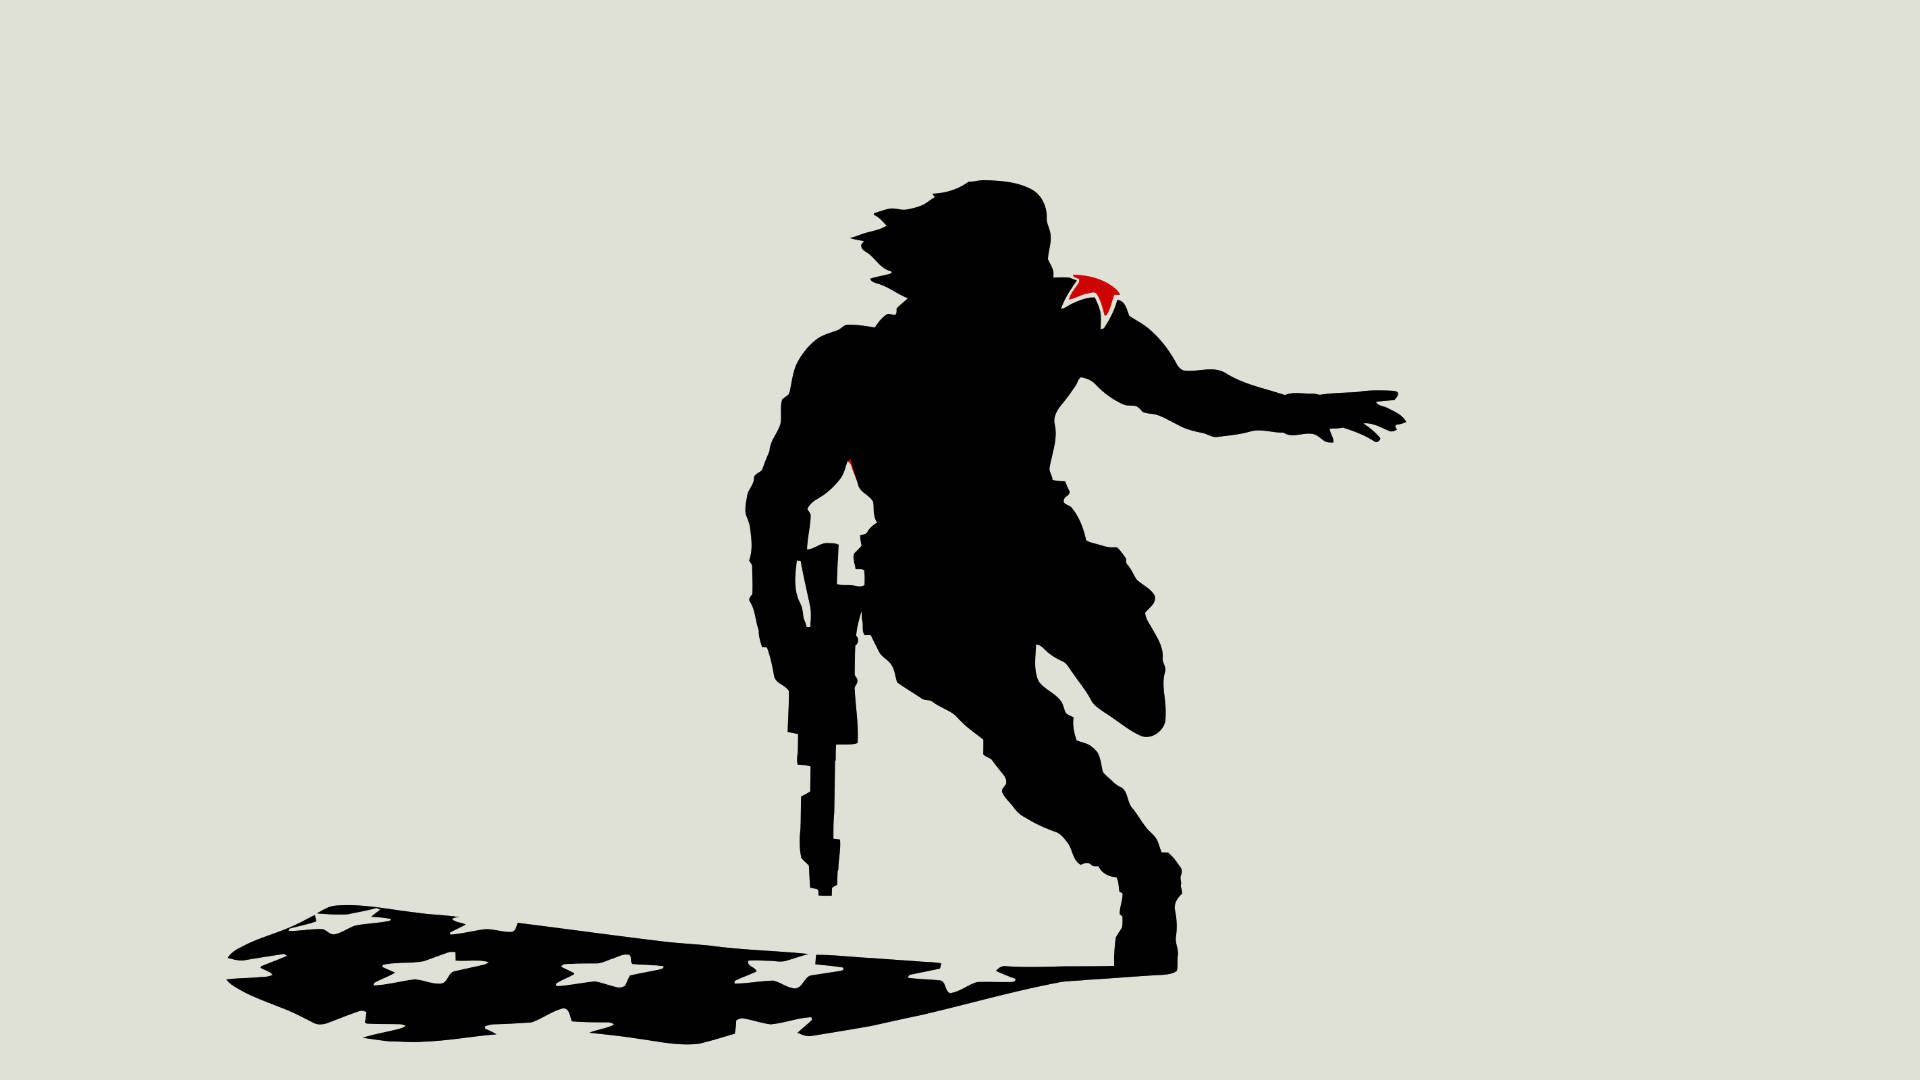 Bucky Barnes Running With A Gun Background